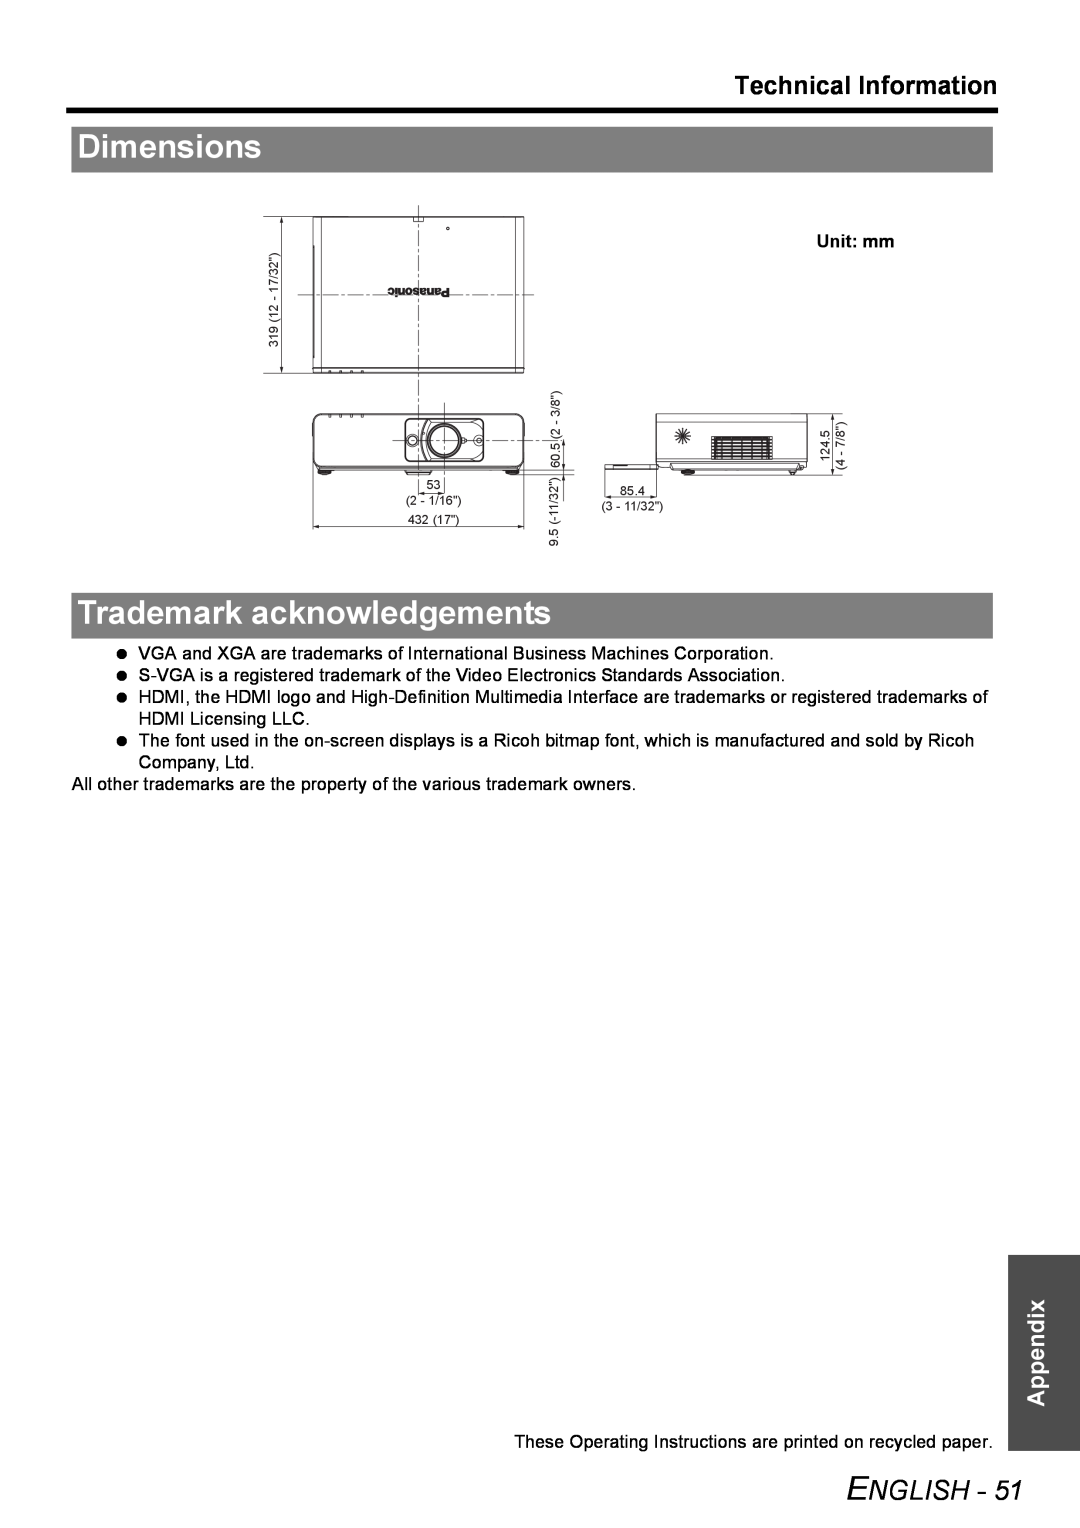 Panasonic PT-FW100NTU manual Dimensions, Trademark acknowledgements, English, Technical Information, Appendix 